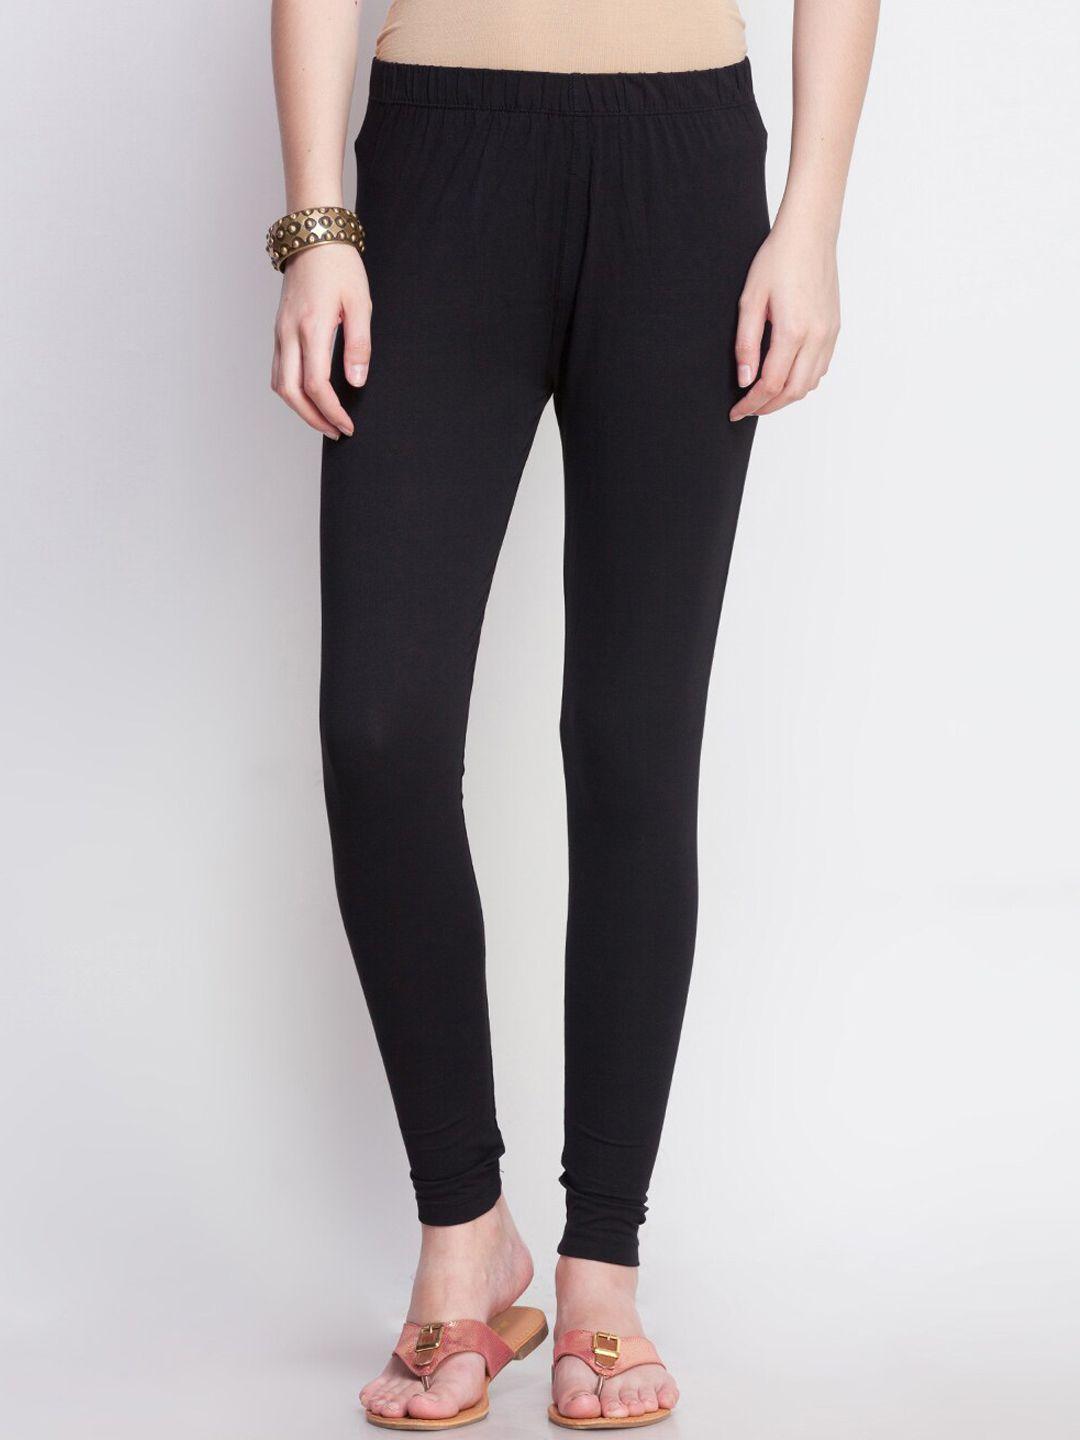 dollar missy women black solid cotton slim-fit ankle-length leggings